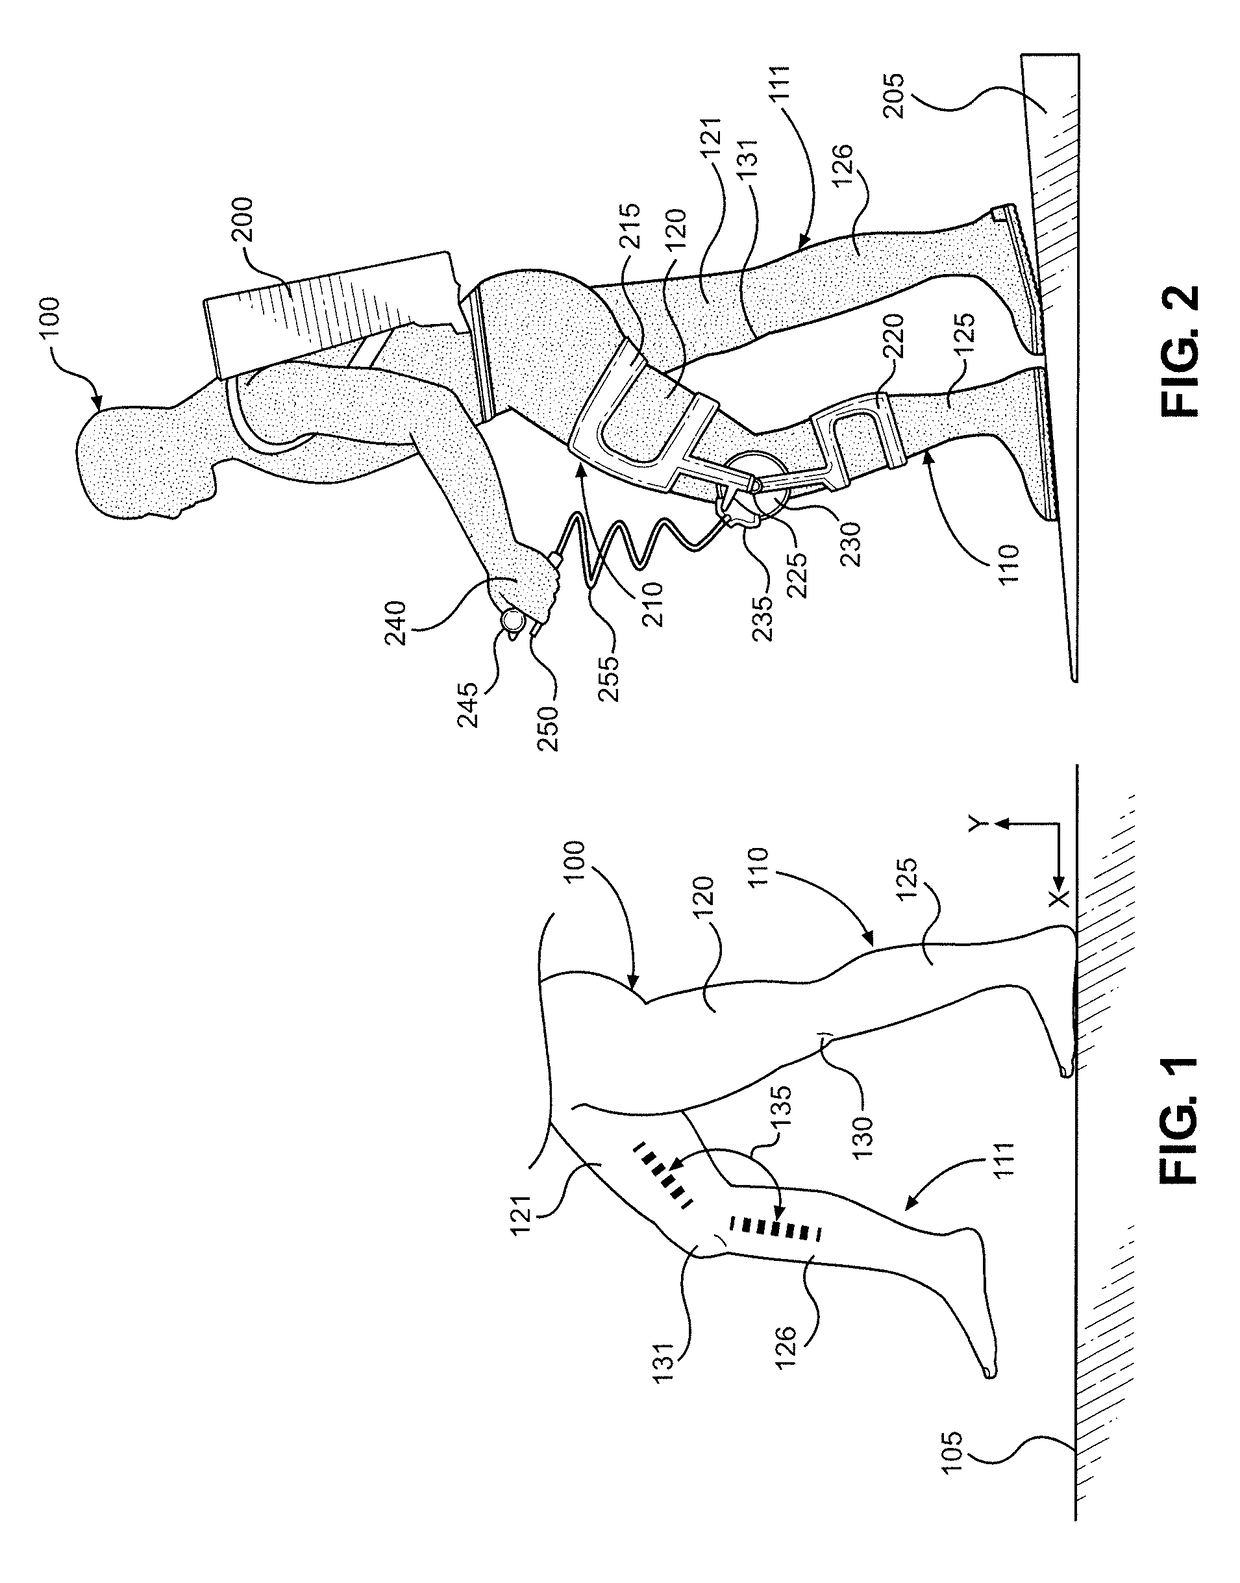 Exoskeleton Device and Method of Impeding Relative Movement in the Exoskeleton Device